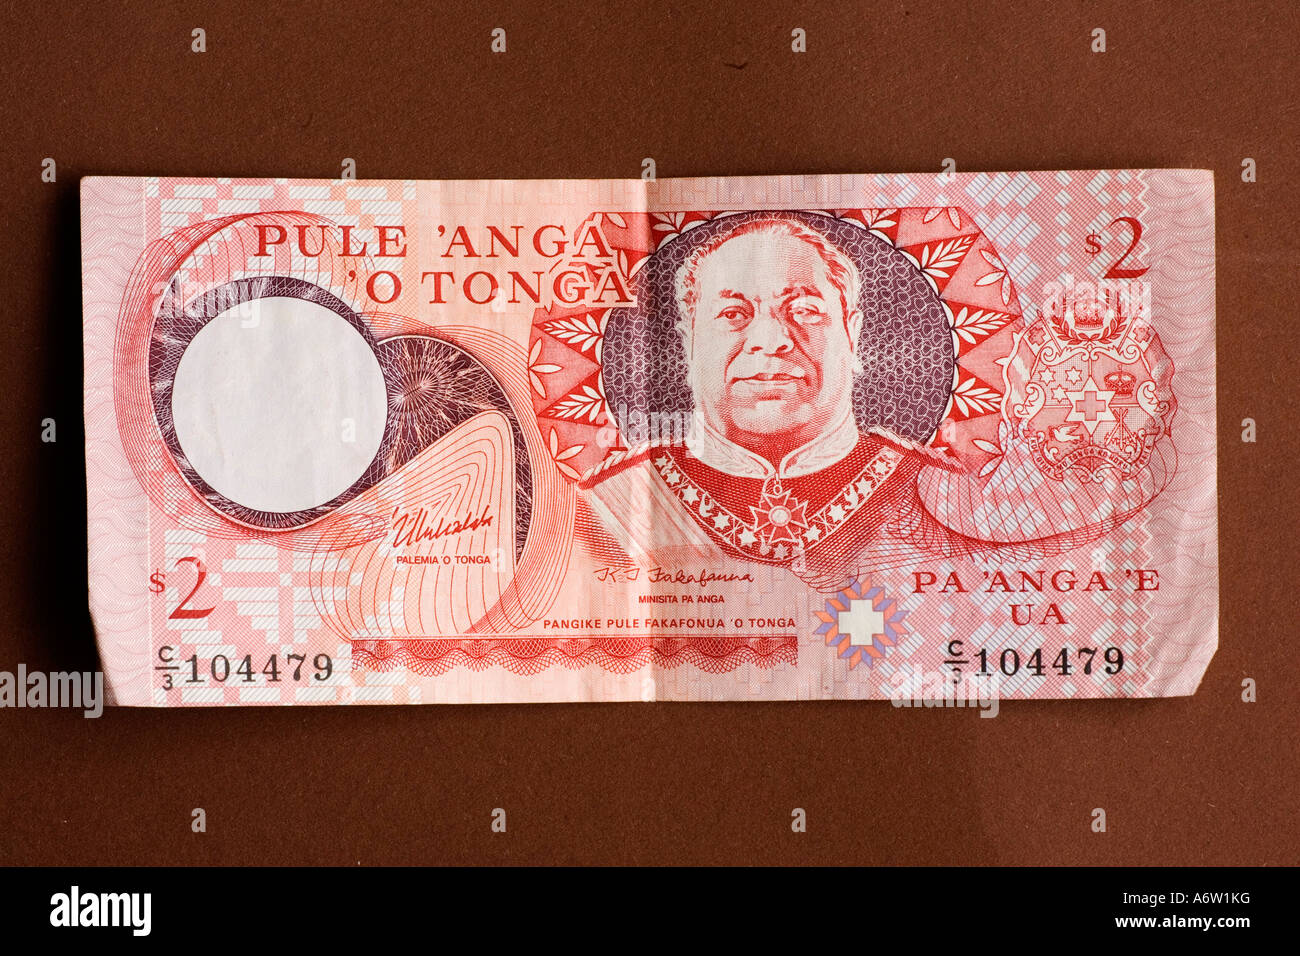 Banknote of Tonga Stock Photo